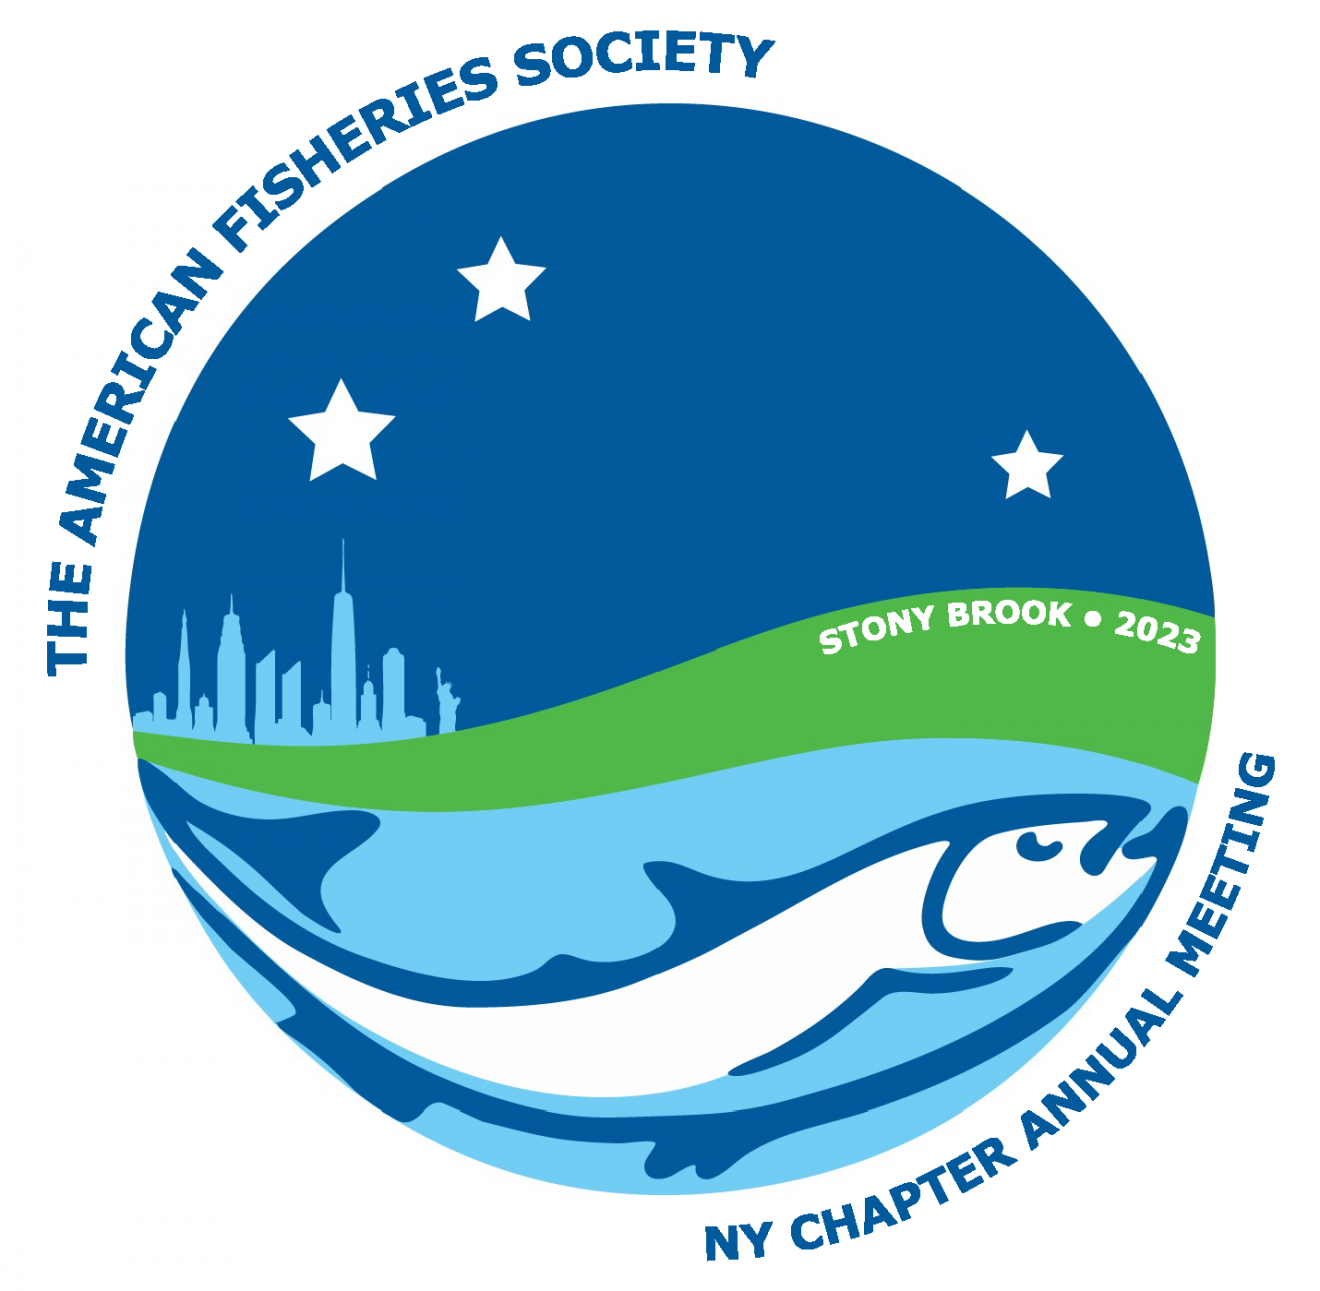 NYCAFS 2023 Annual Meeting, FEBRUARY 810, 2023 Stony Brook